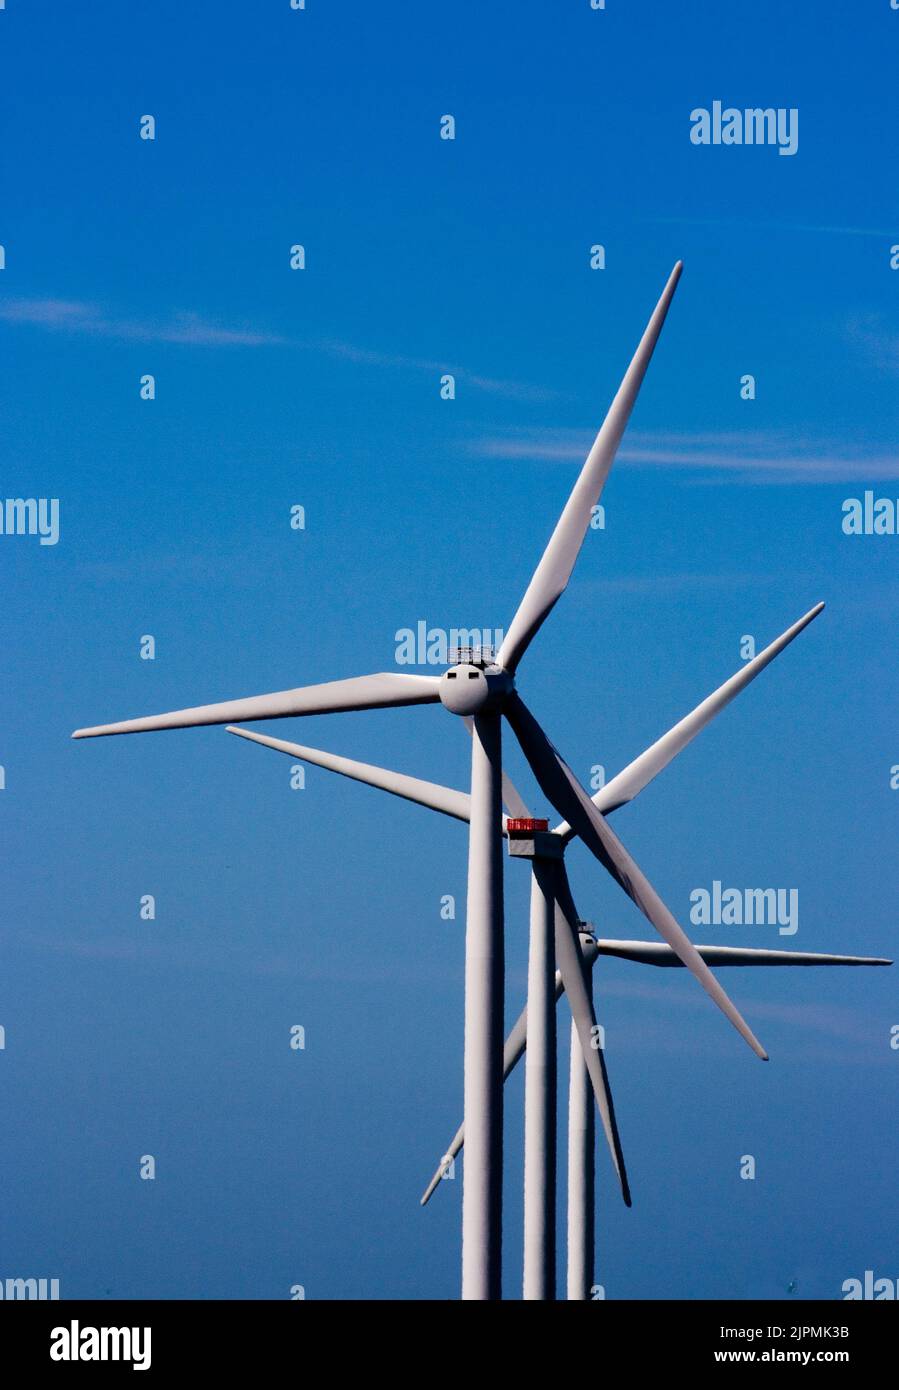 3 Windräder in Reihe hintereinander gegen blauen Himmel * tre turbine eoliche in fila contro il cielo blu Foto Stock